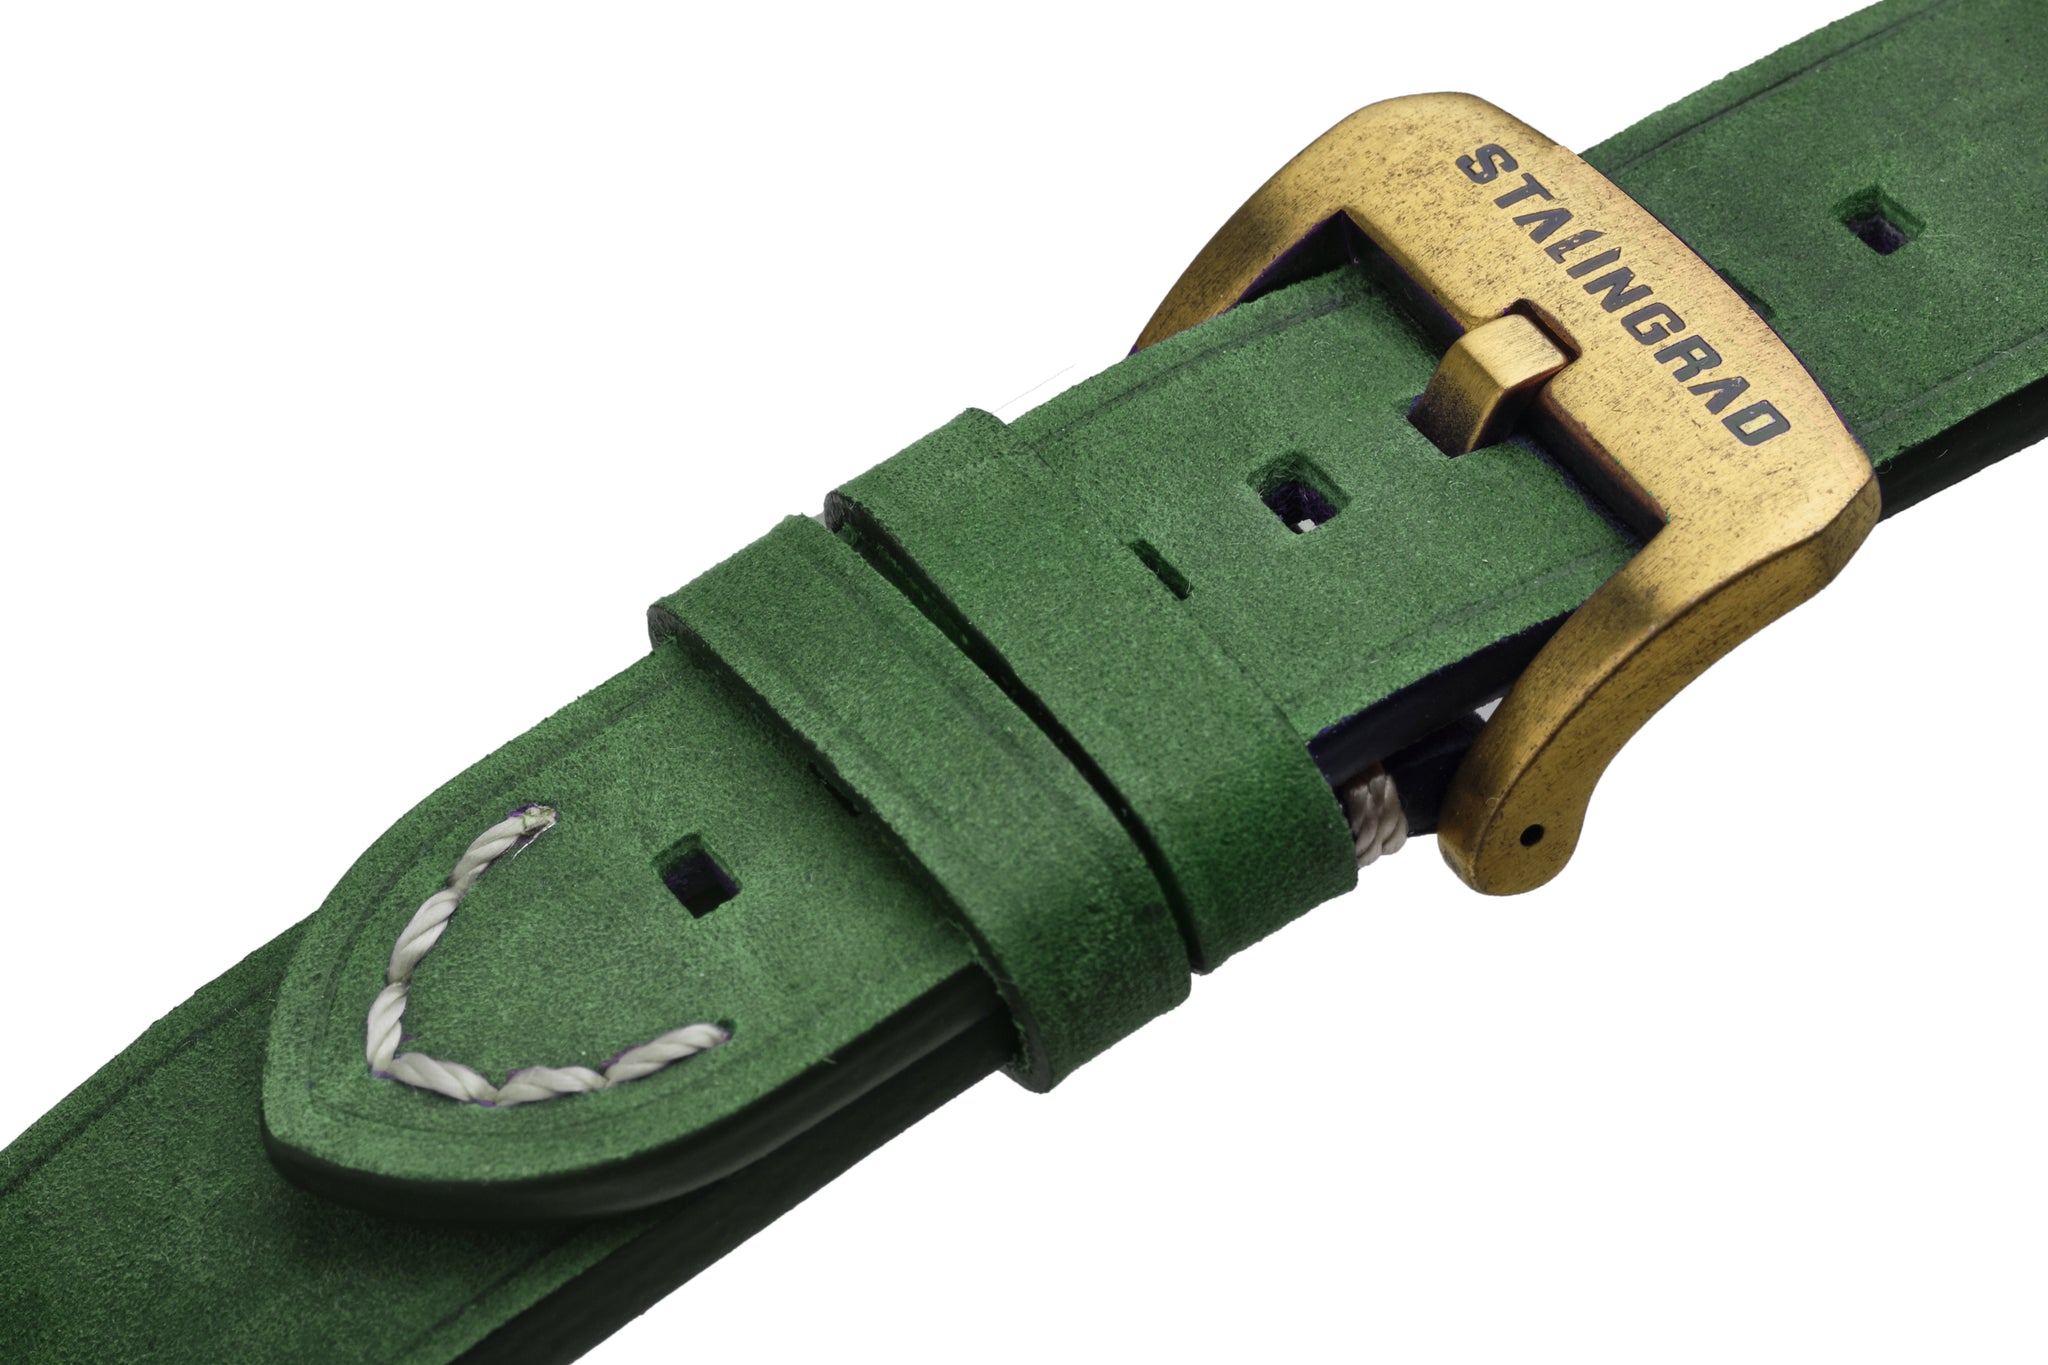 Bronze Watch Green Leather Strap